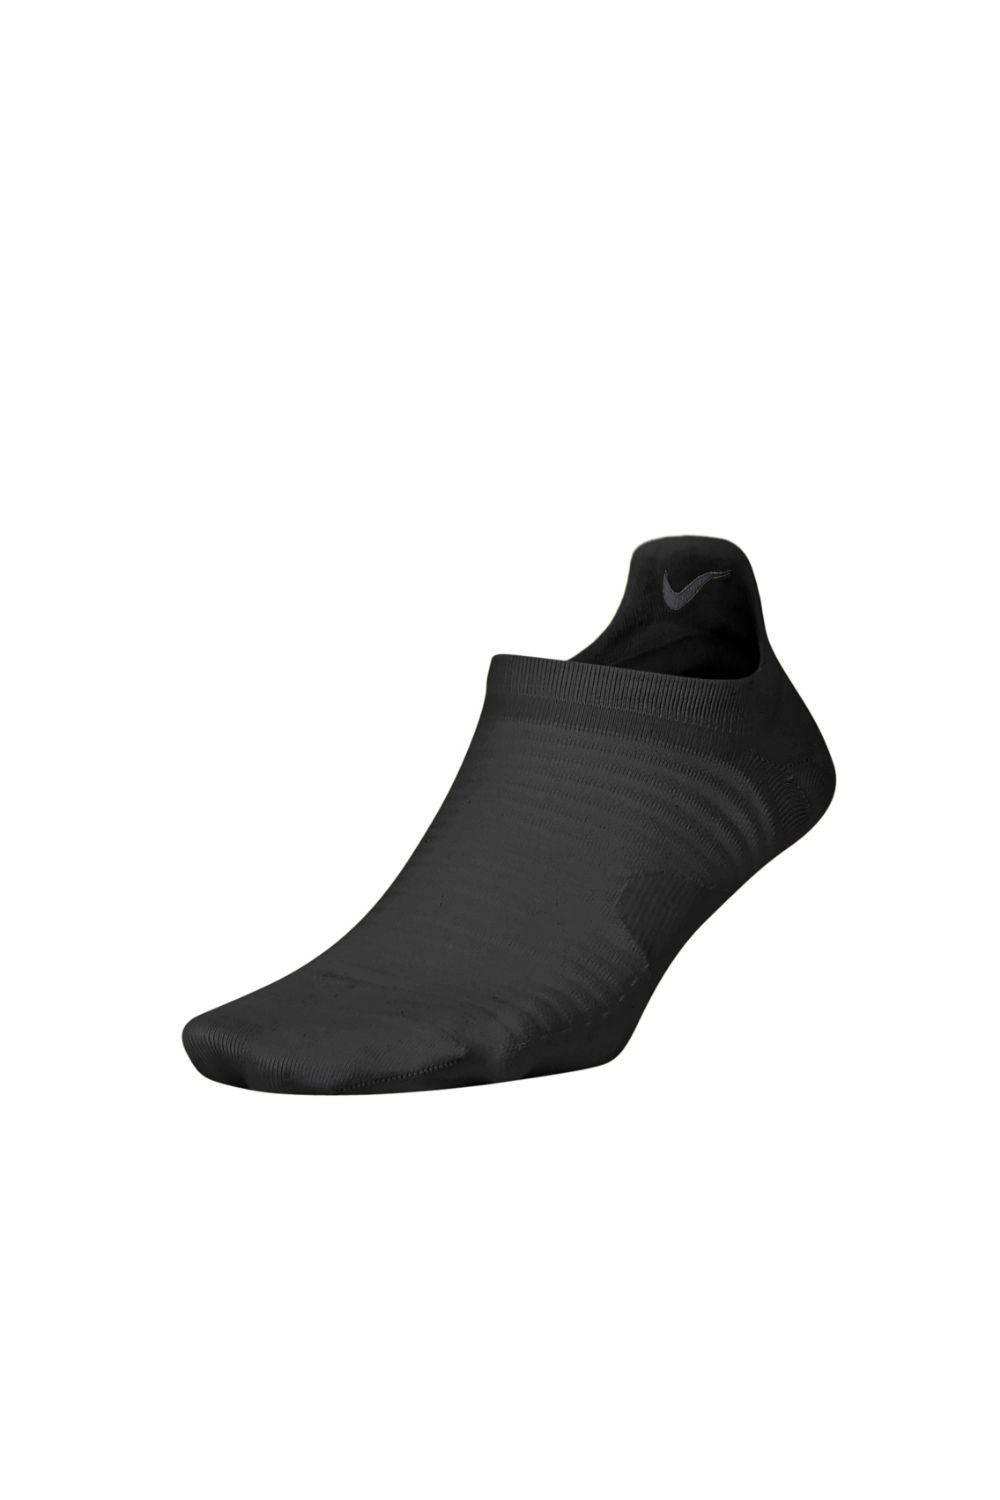 NIKE - Unisex κάλτσες NIKE SPARK LTWT NS μαύρες Γυναικεία/Αξεσουάρ/Κάλτσες